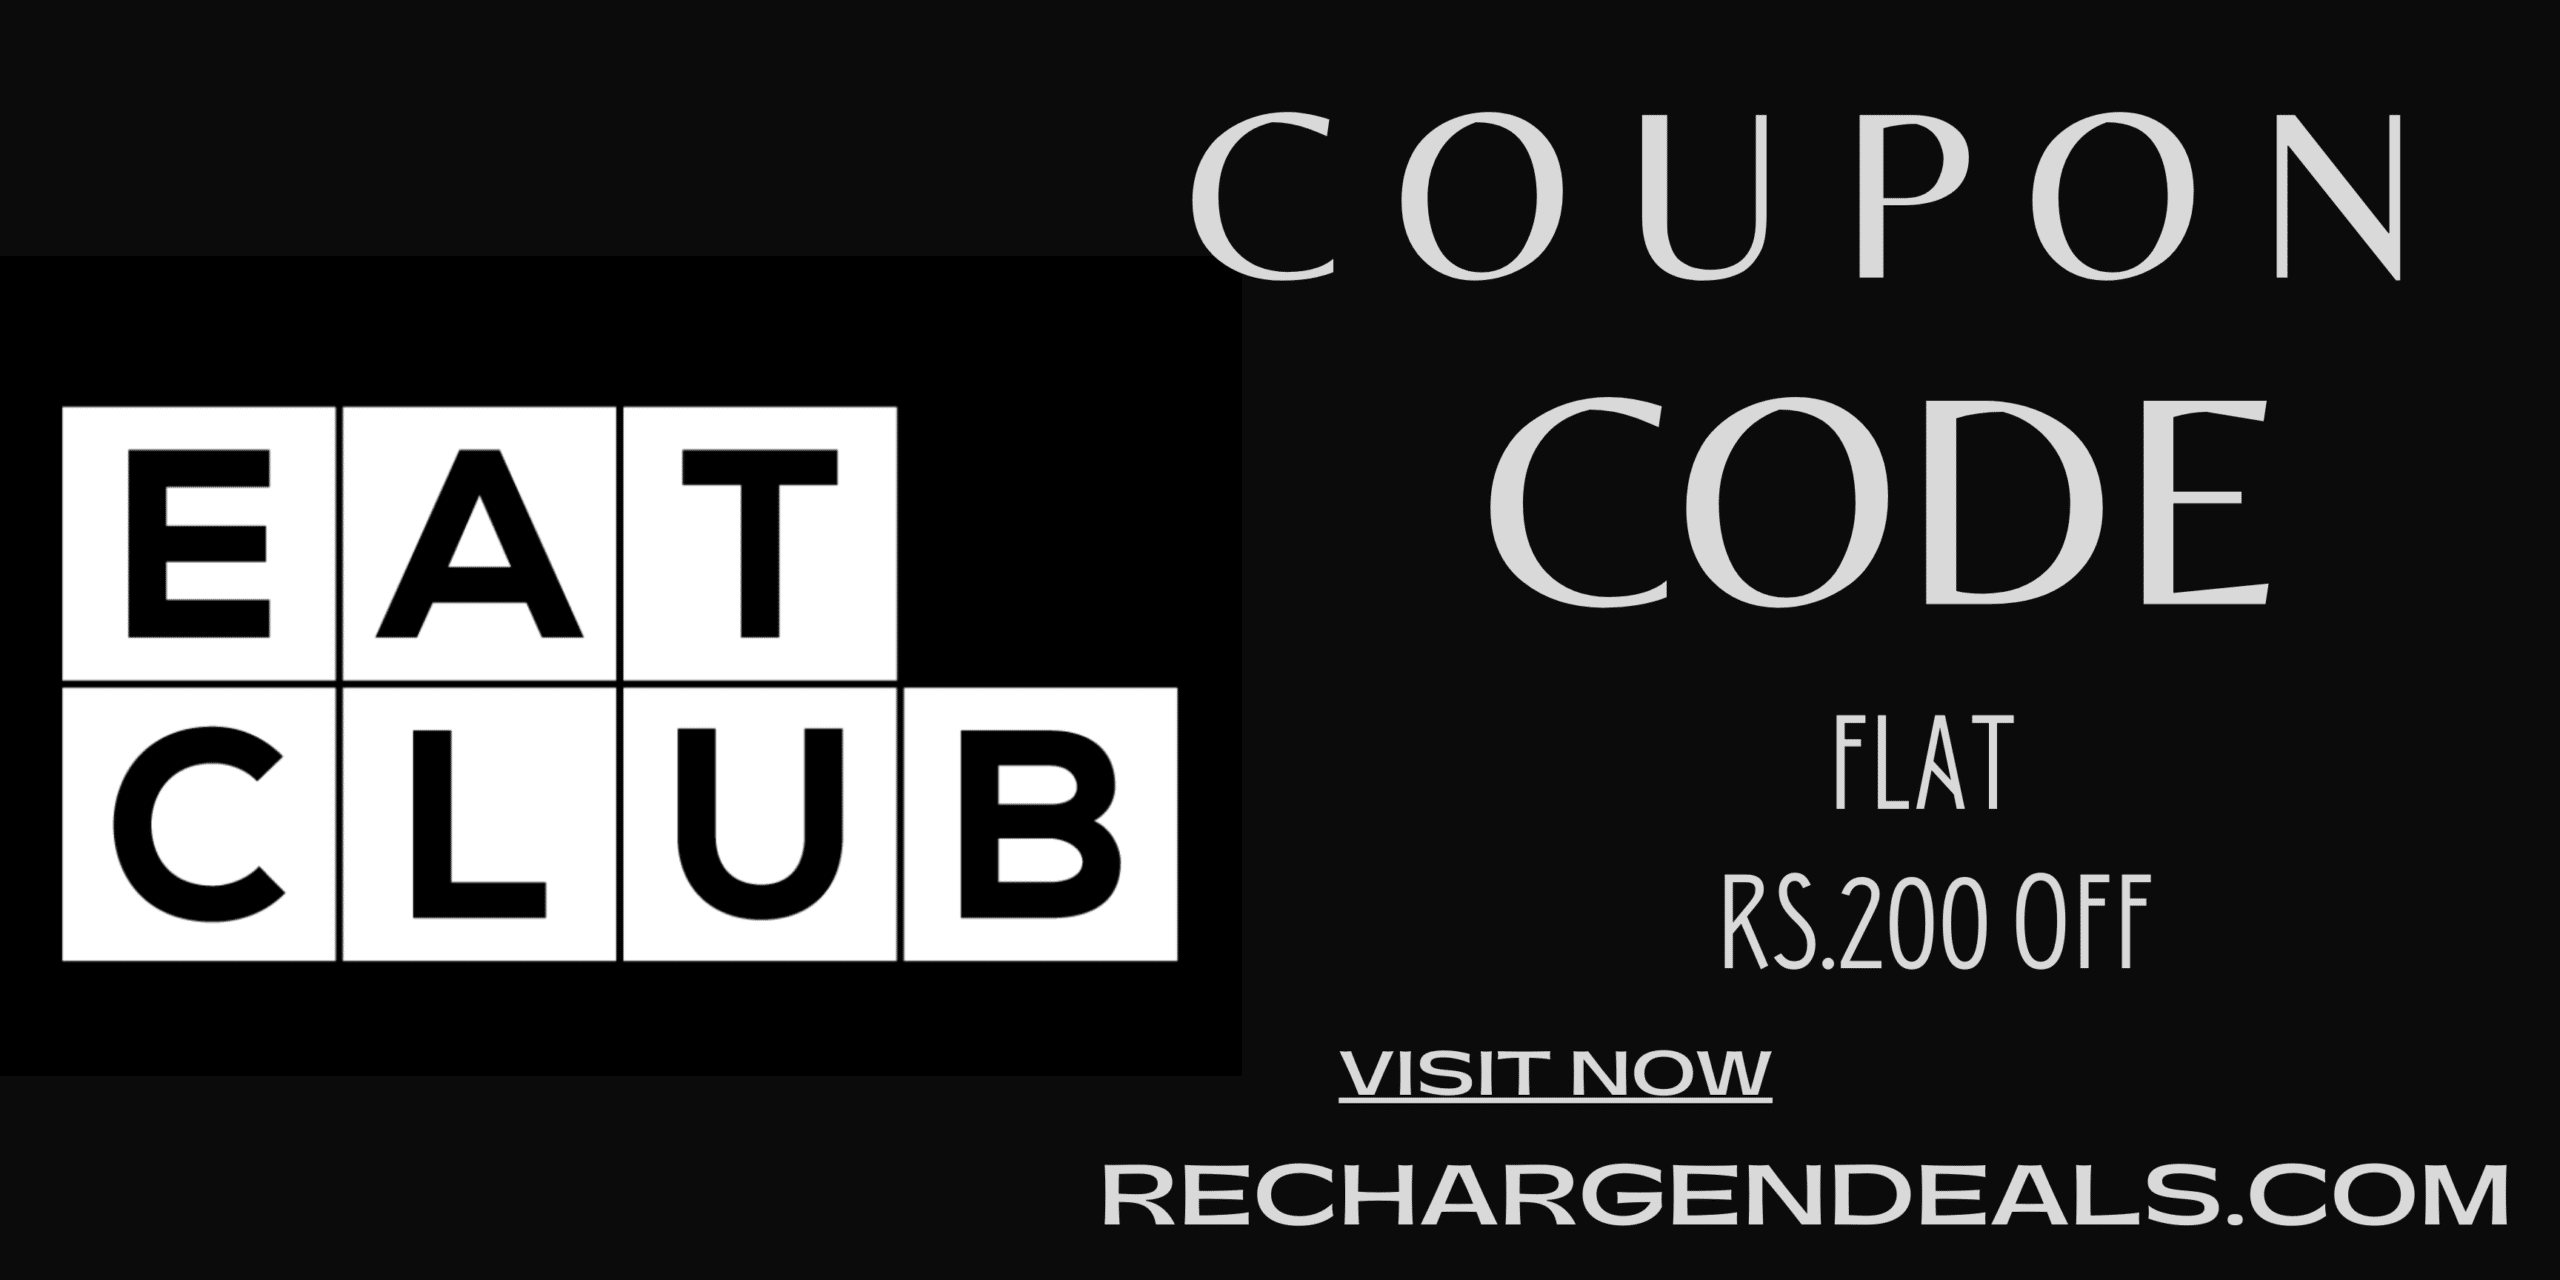 Eatclub Coupon Code